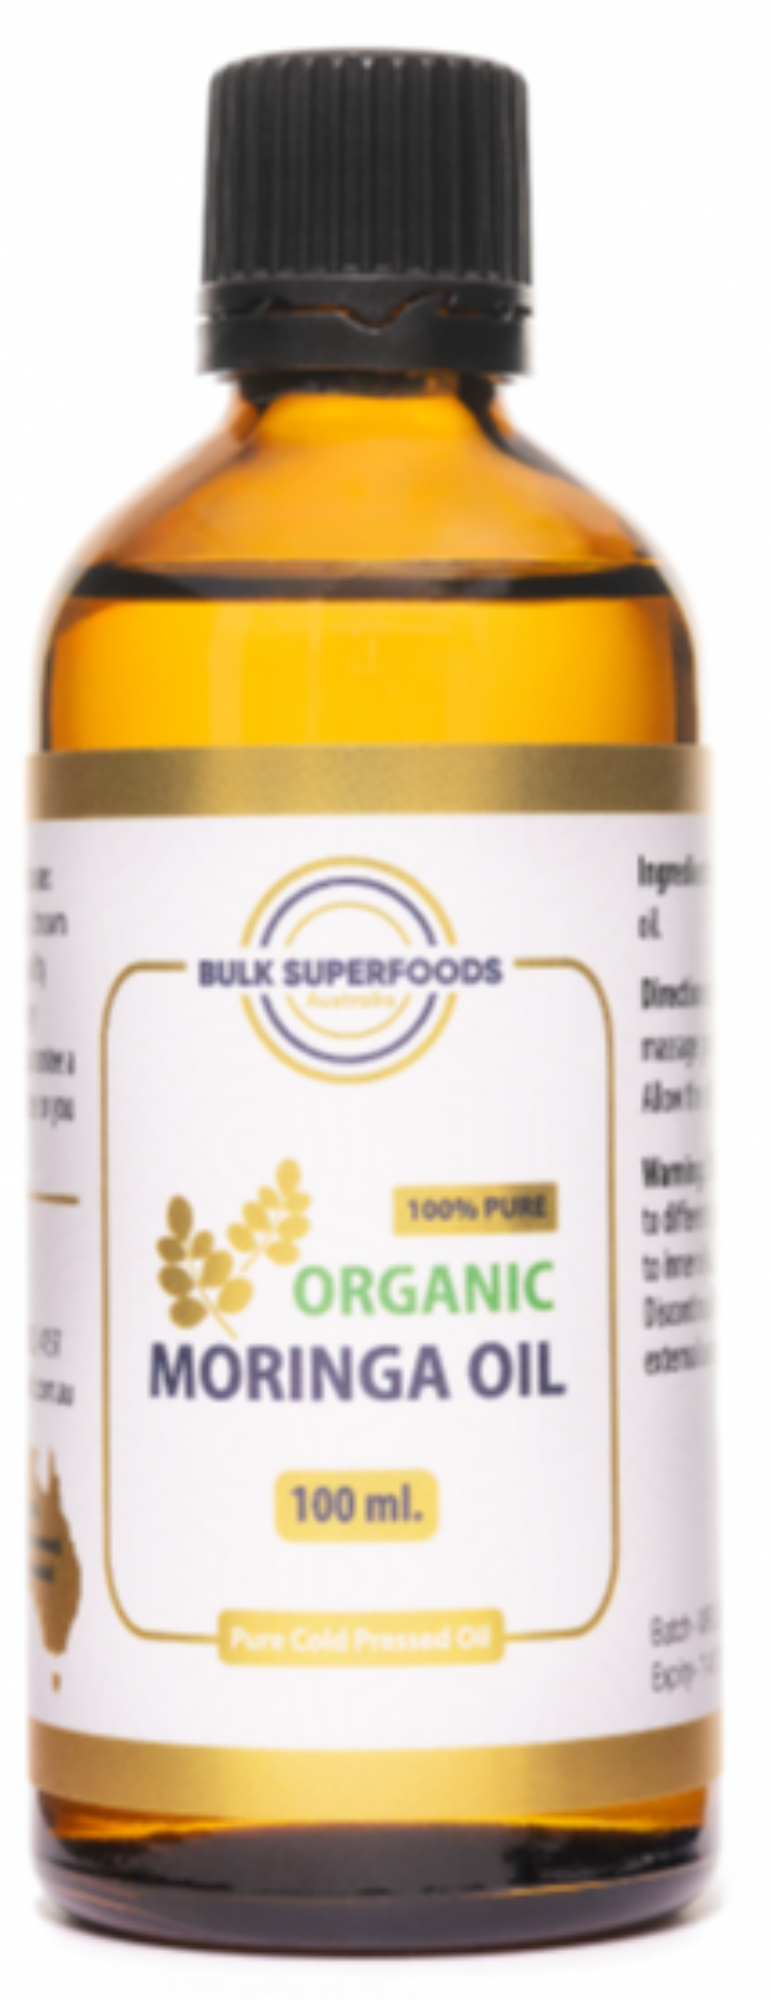 Organic Moringa Oil by Bulk Super Foods